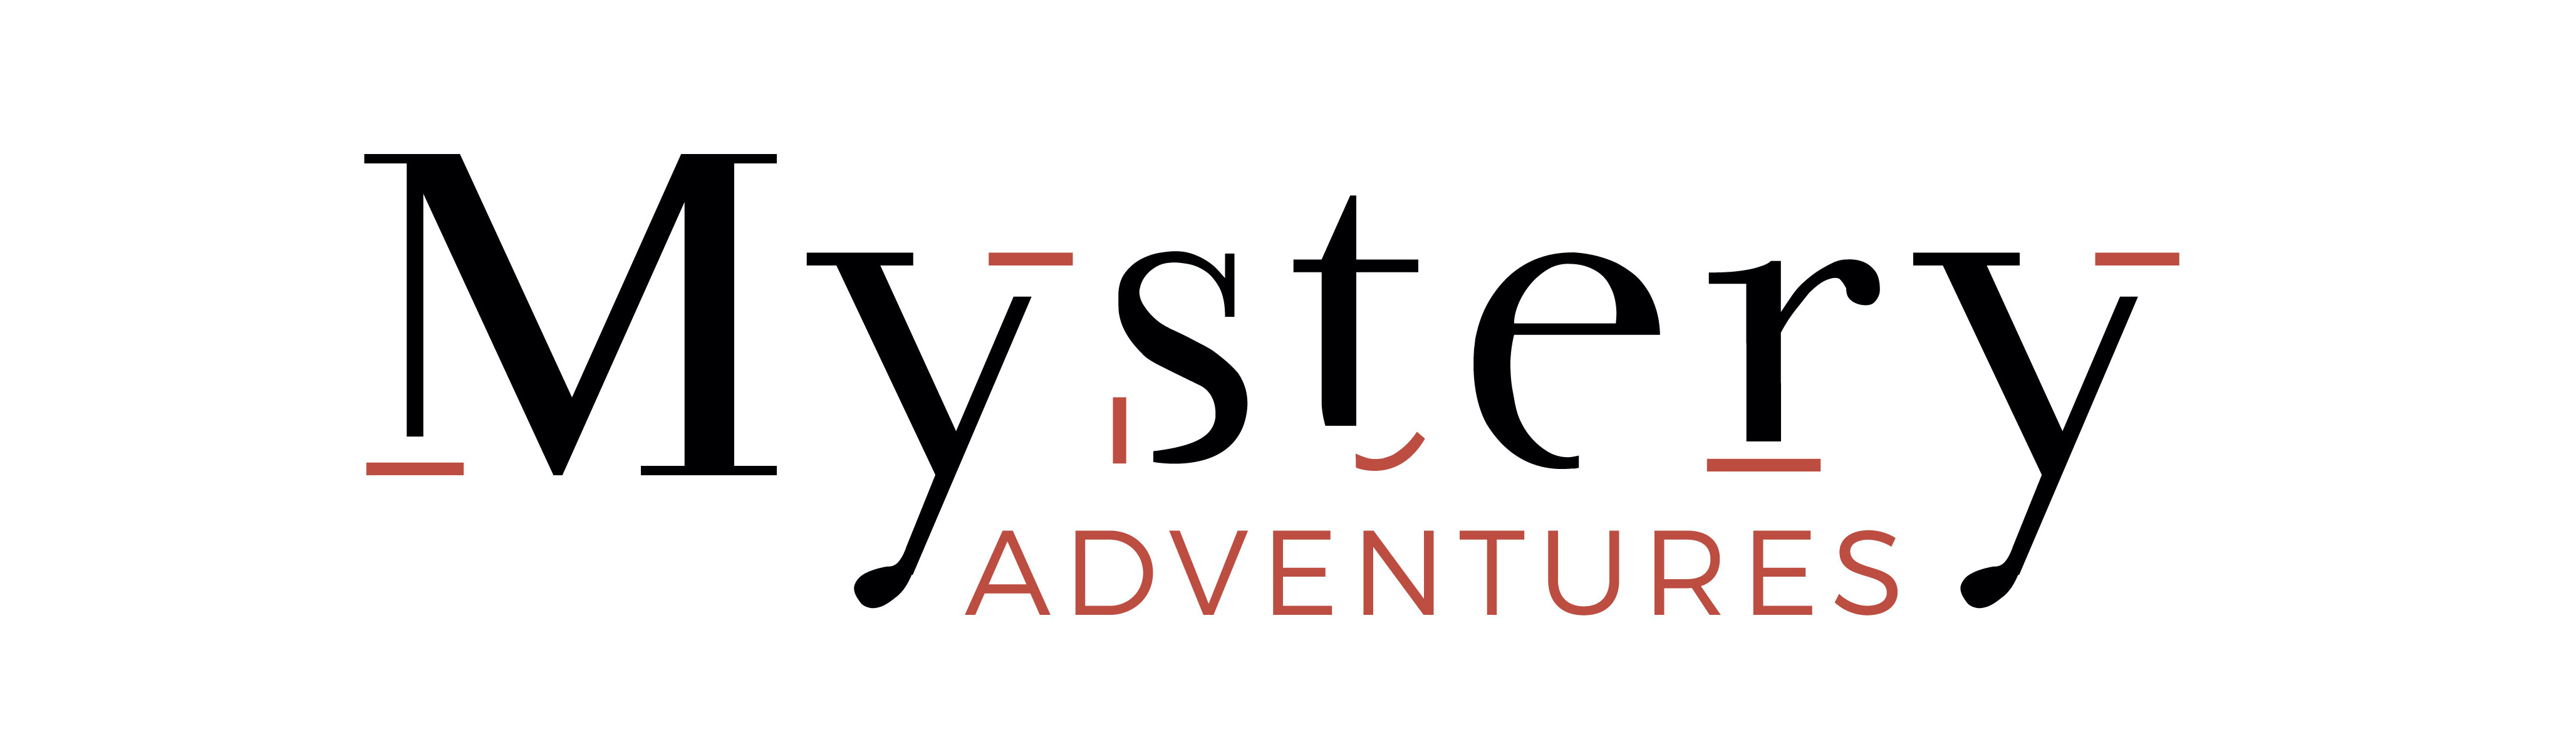 Mystery Adventures Logo